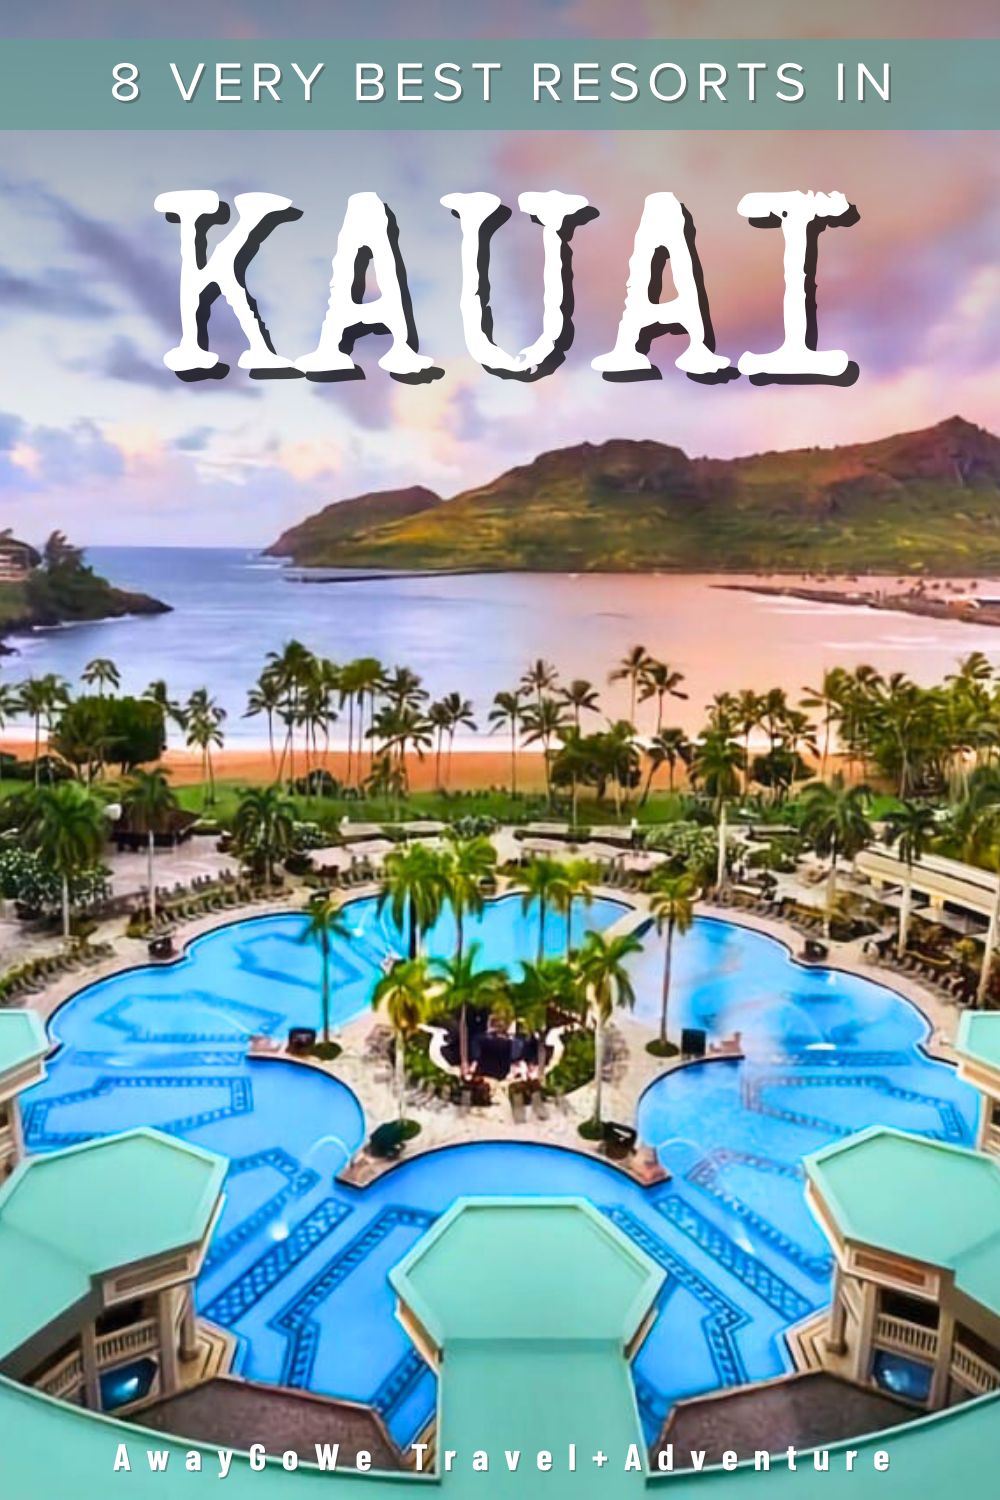 Kauai resorts